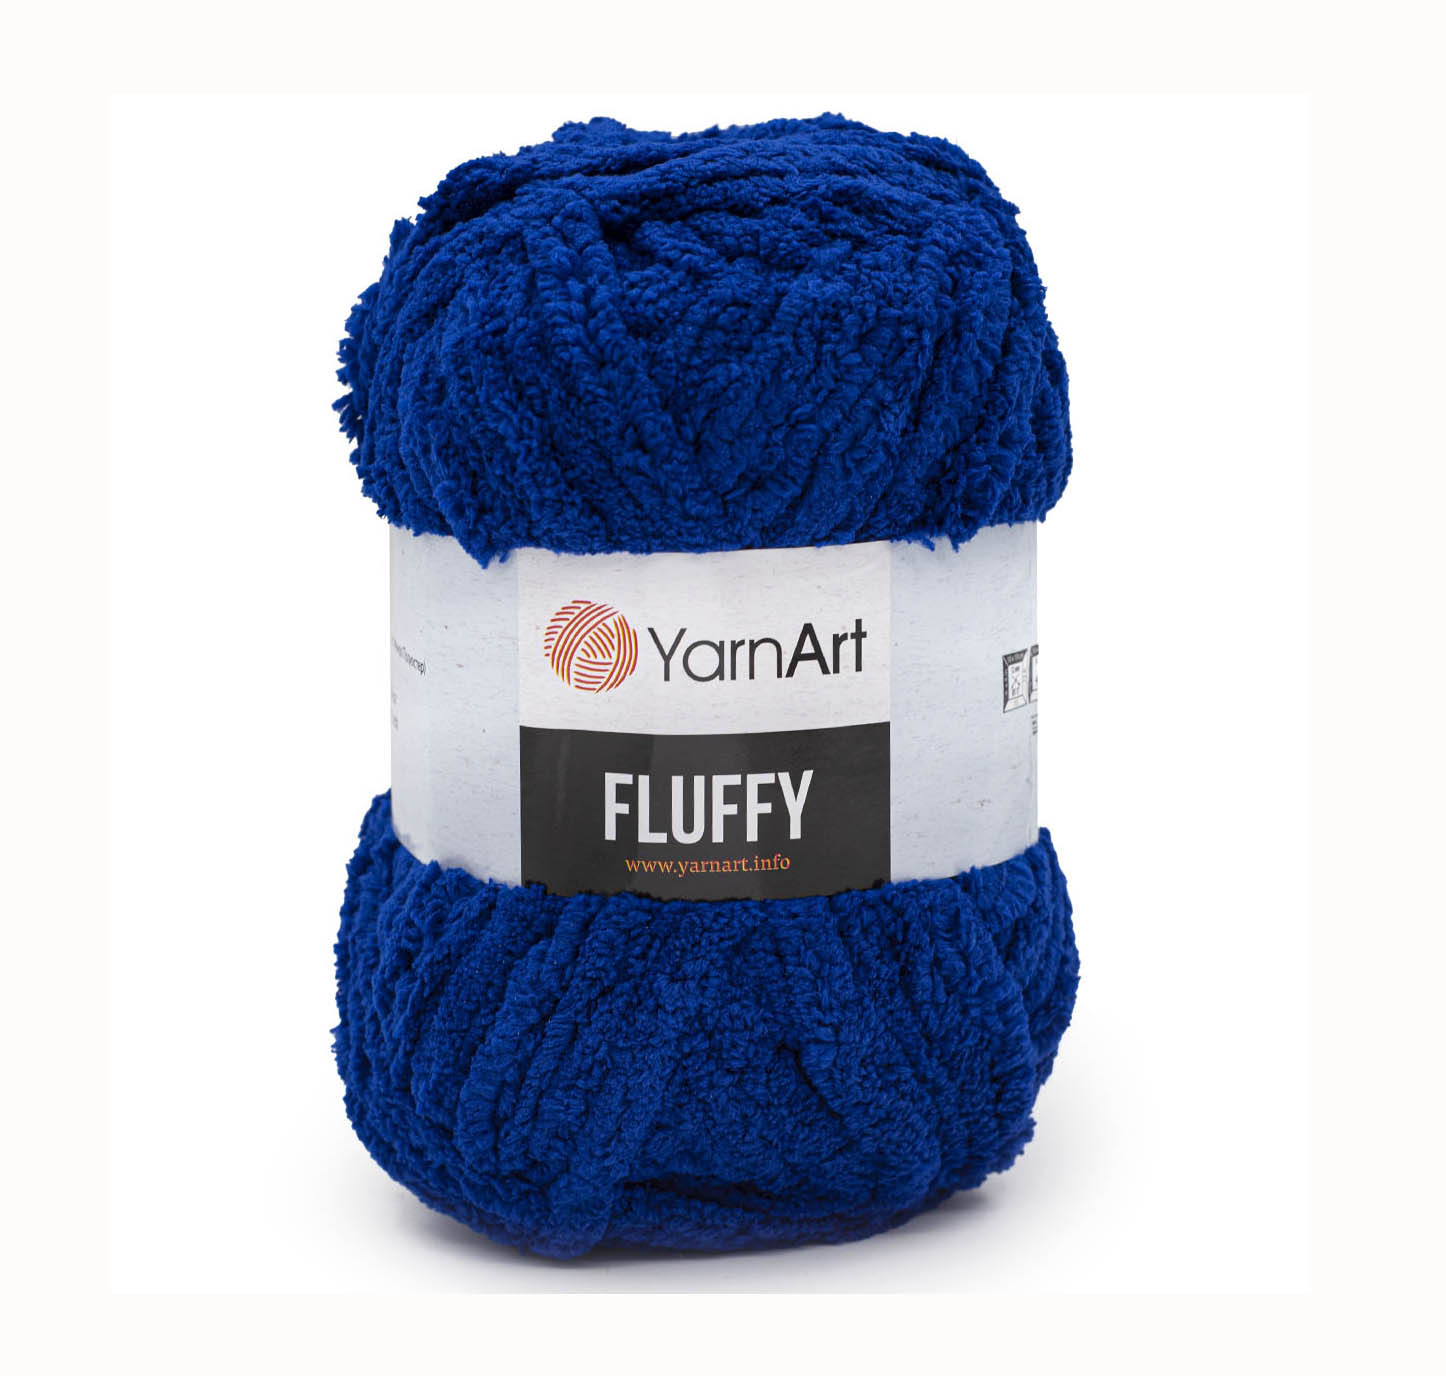 YarnArt Fluffy 727 *